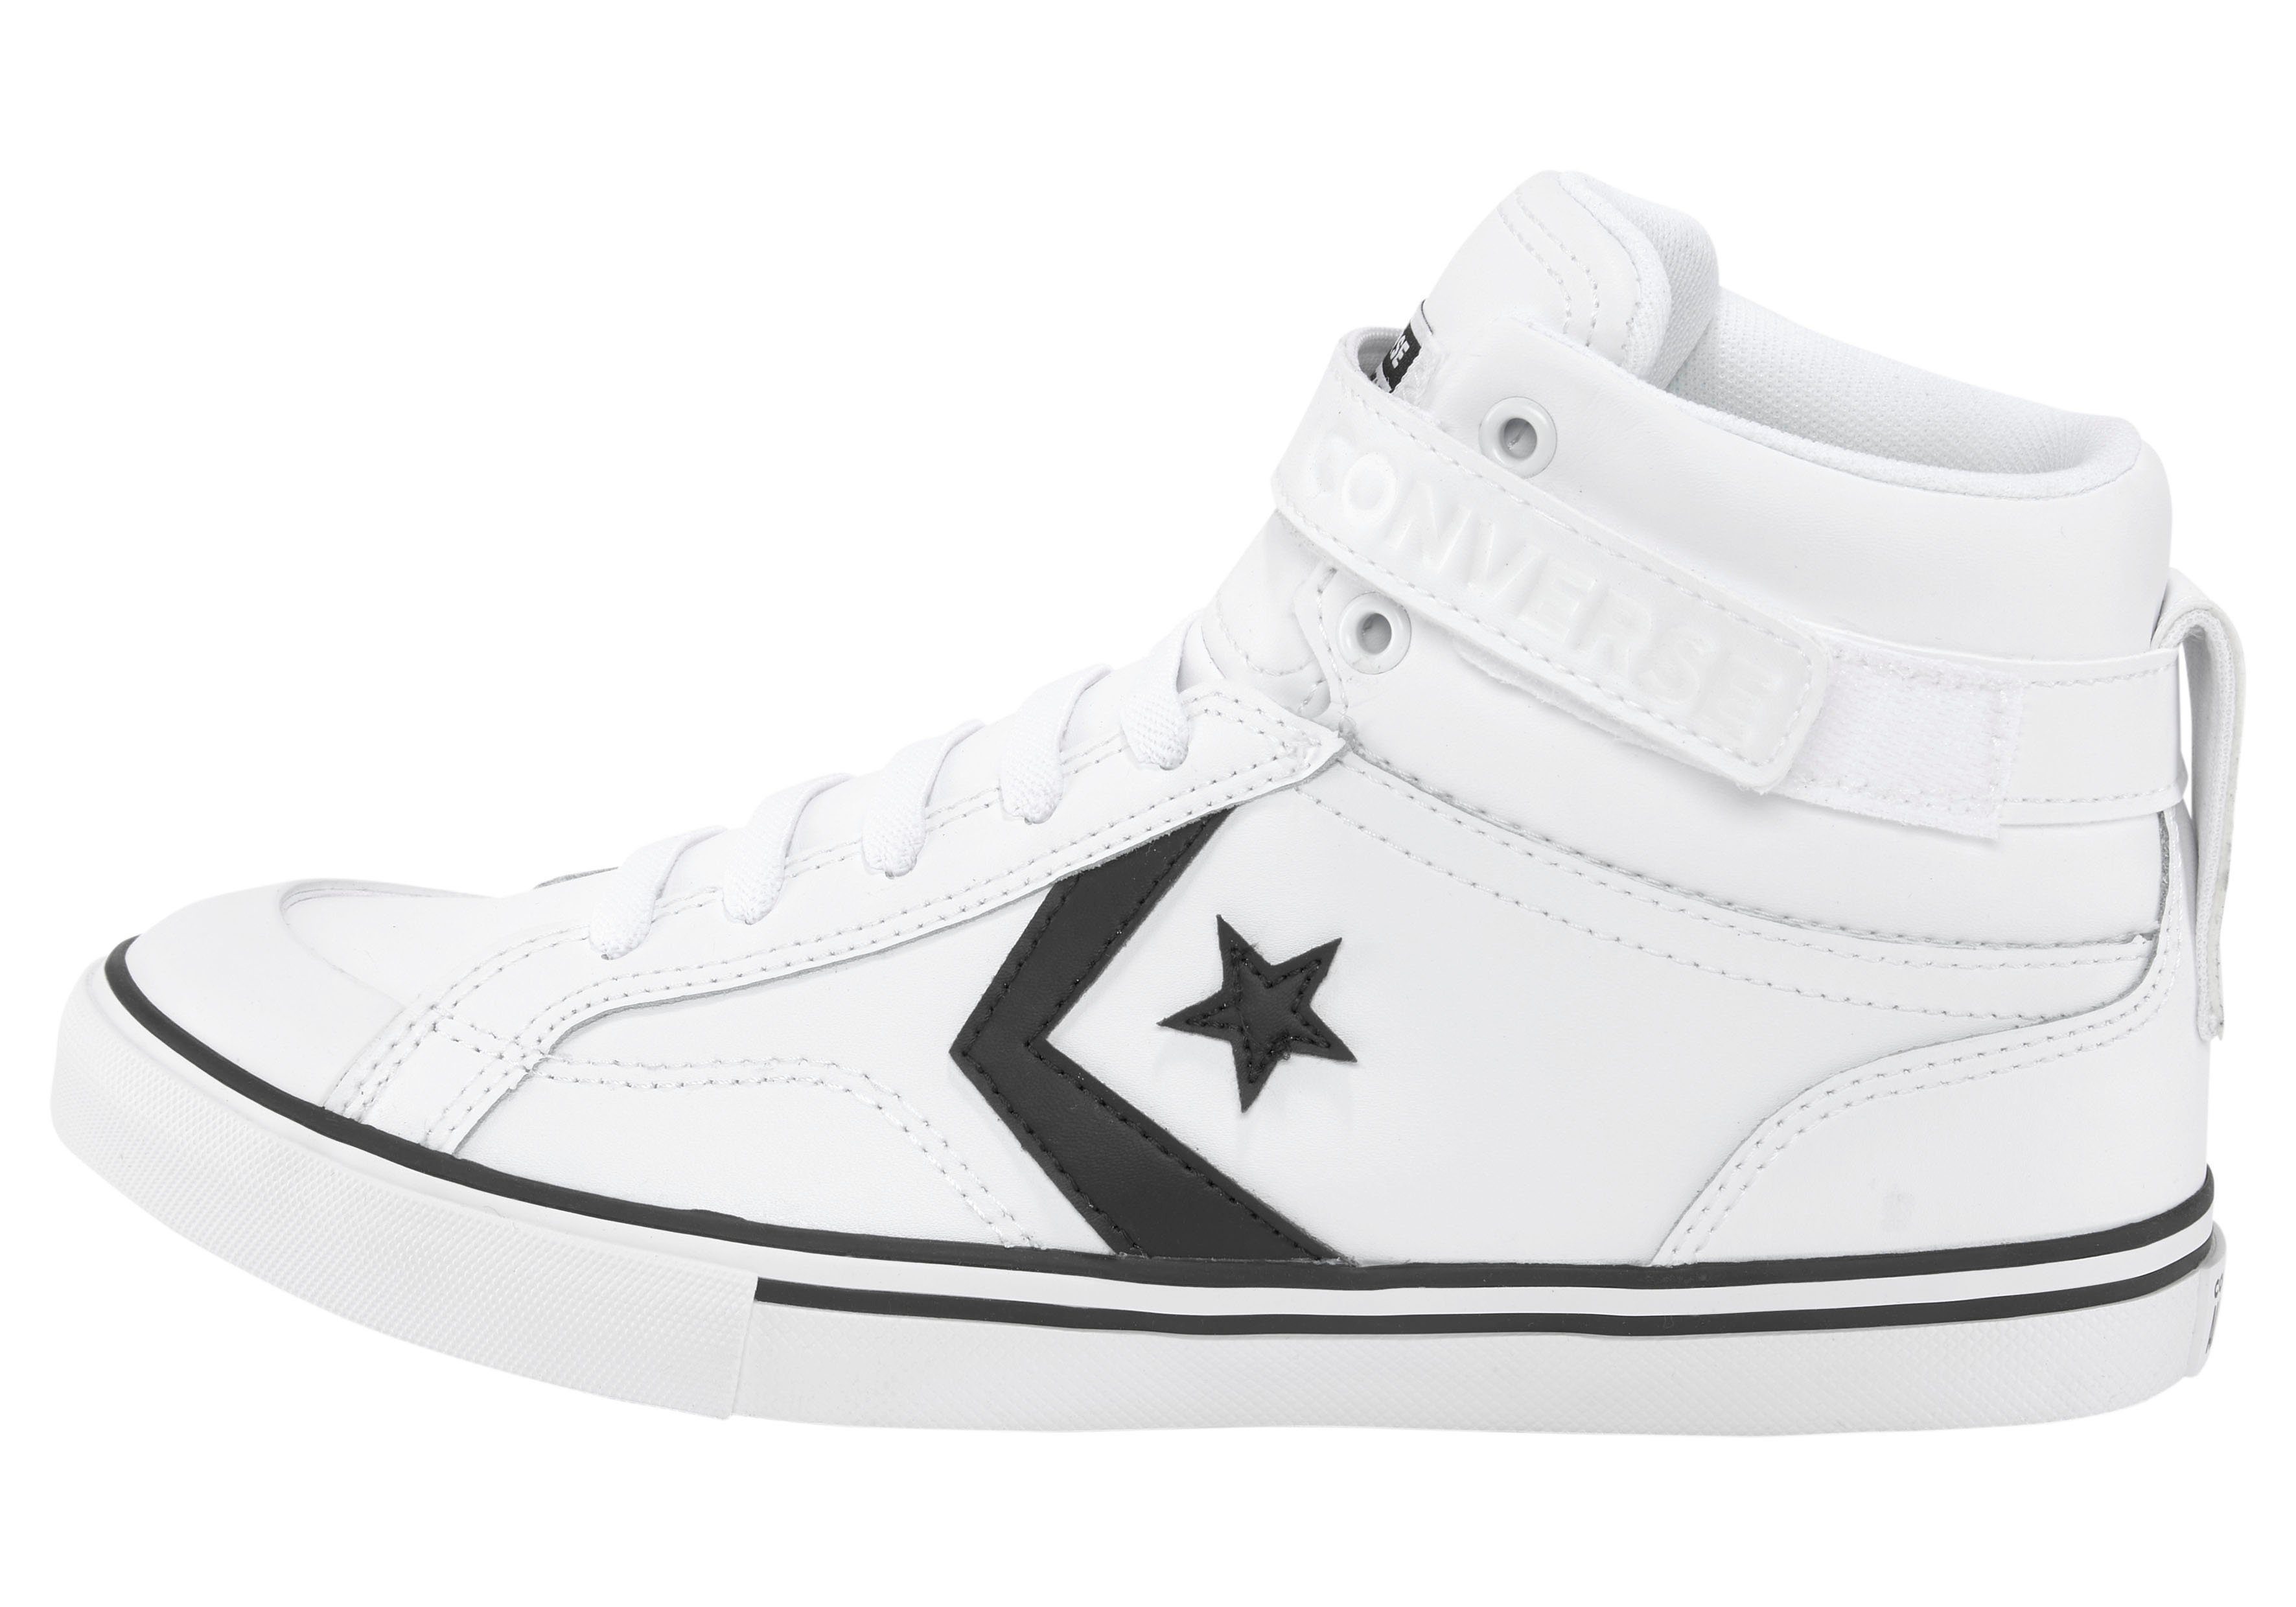 Converse PRO LEATHER weiß-schwarz STRAP Sneaker BLAZE